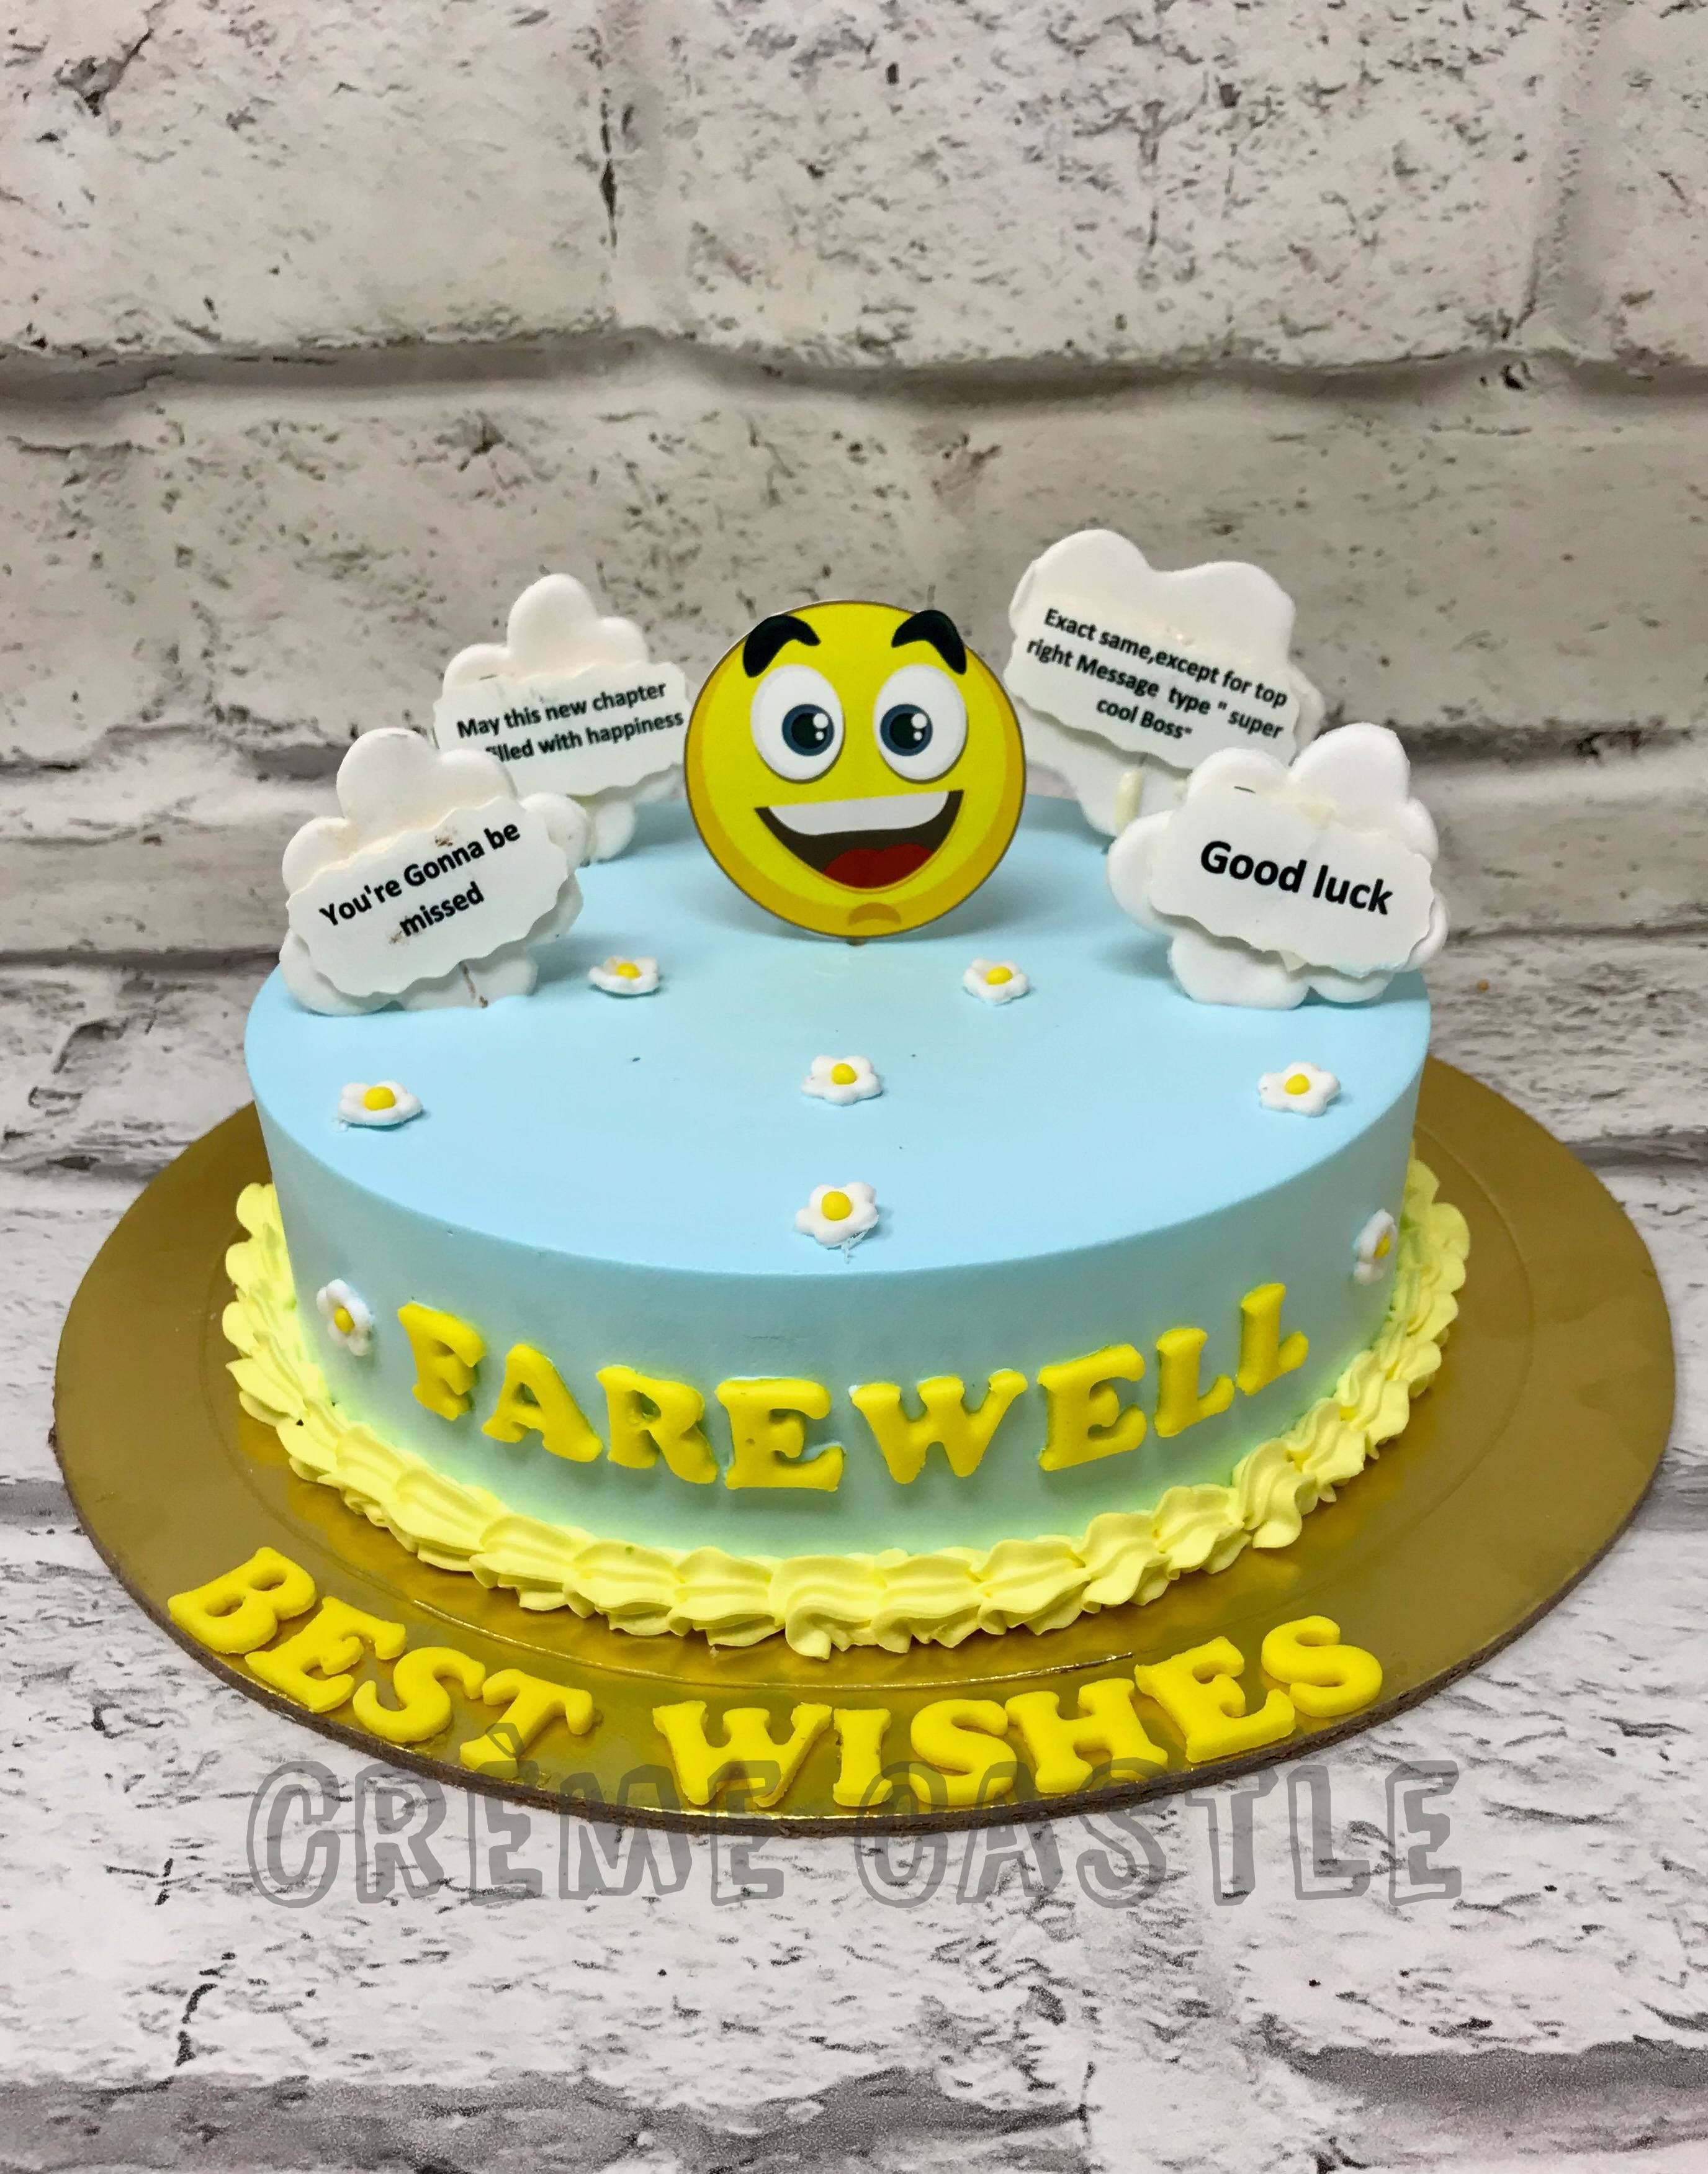 Farewell Cake in dark... - Sweets & Treats by Rashika | Facebook